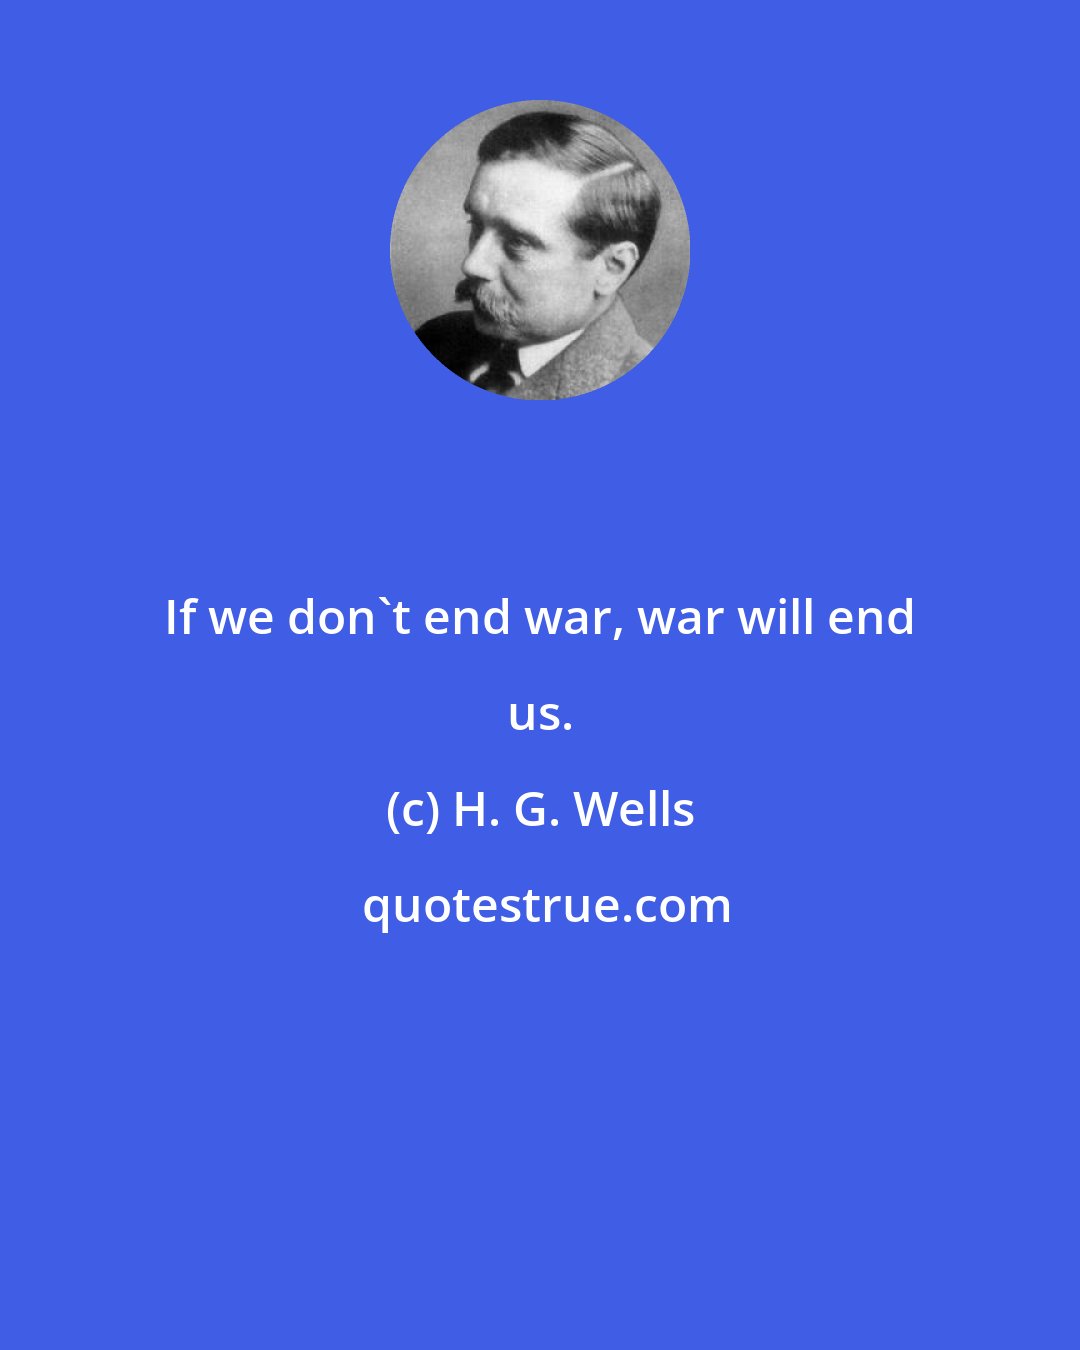 H. G. Wells: If we don't end war, war will end us.